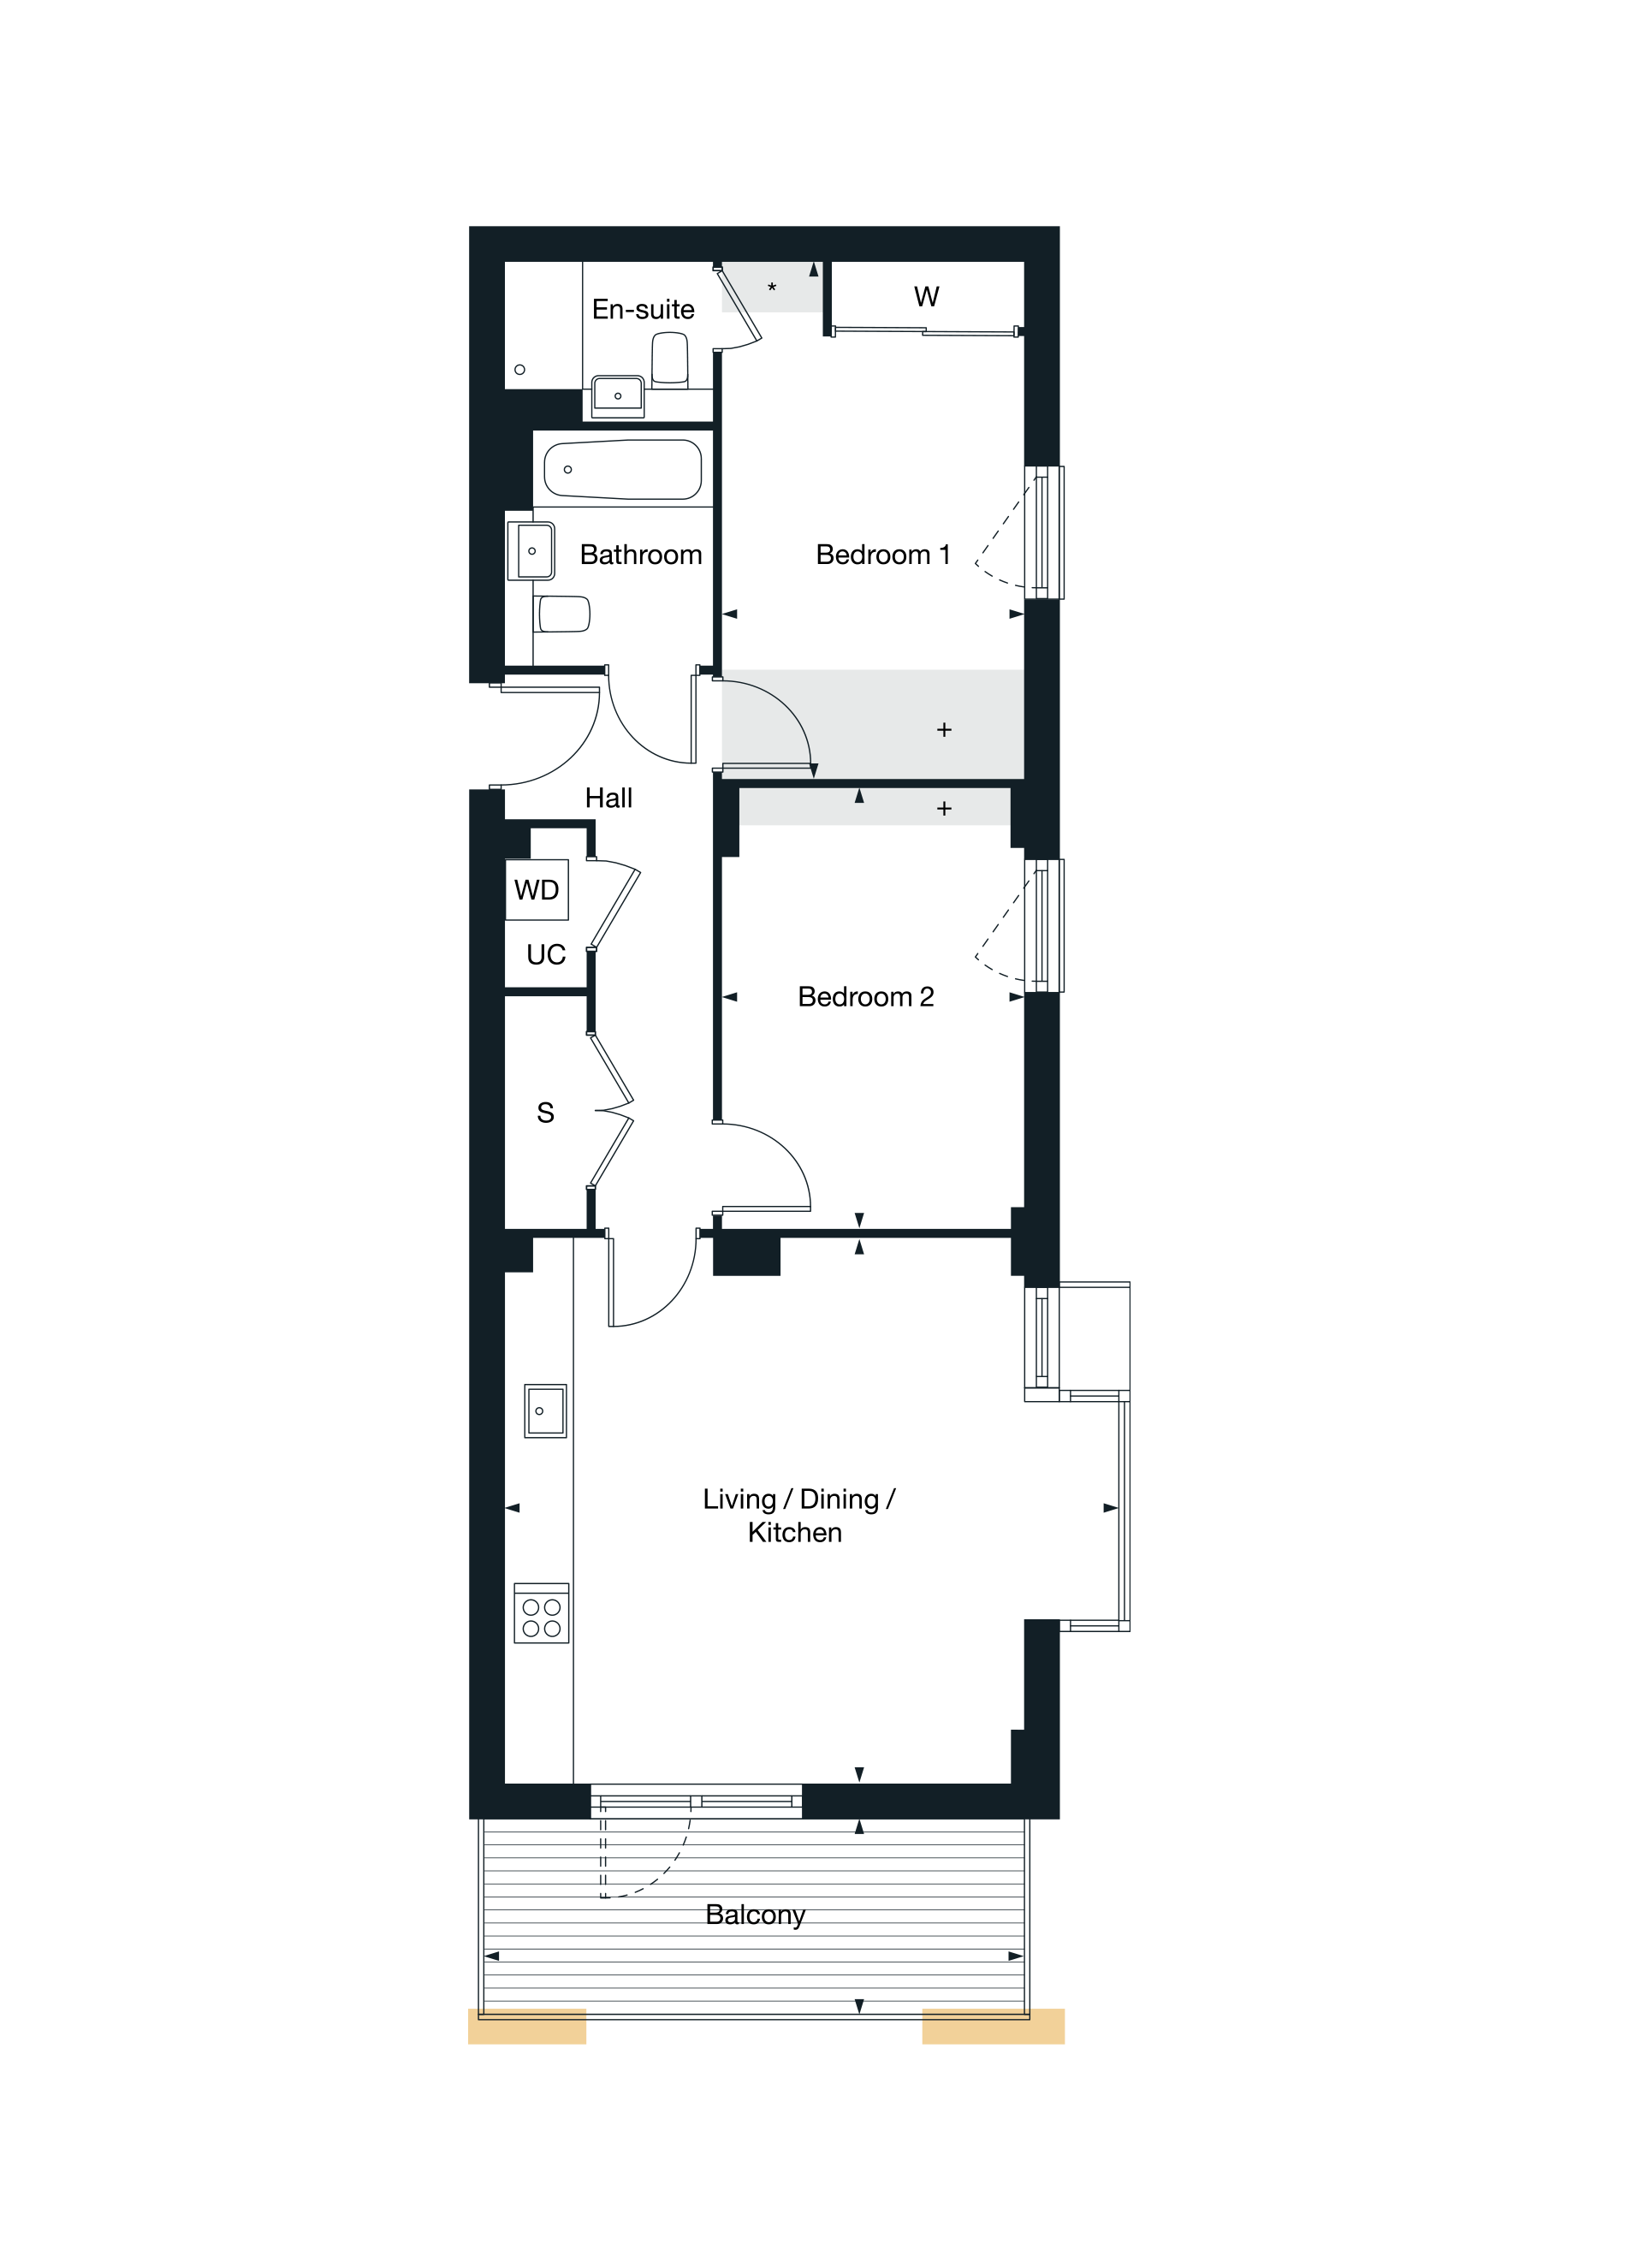 Floor 01 - Plot B1.01 floorplan